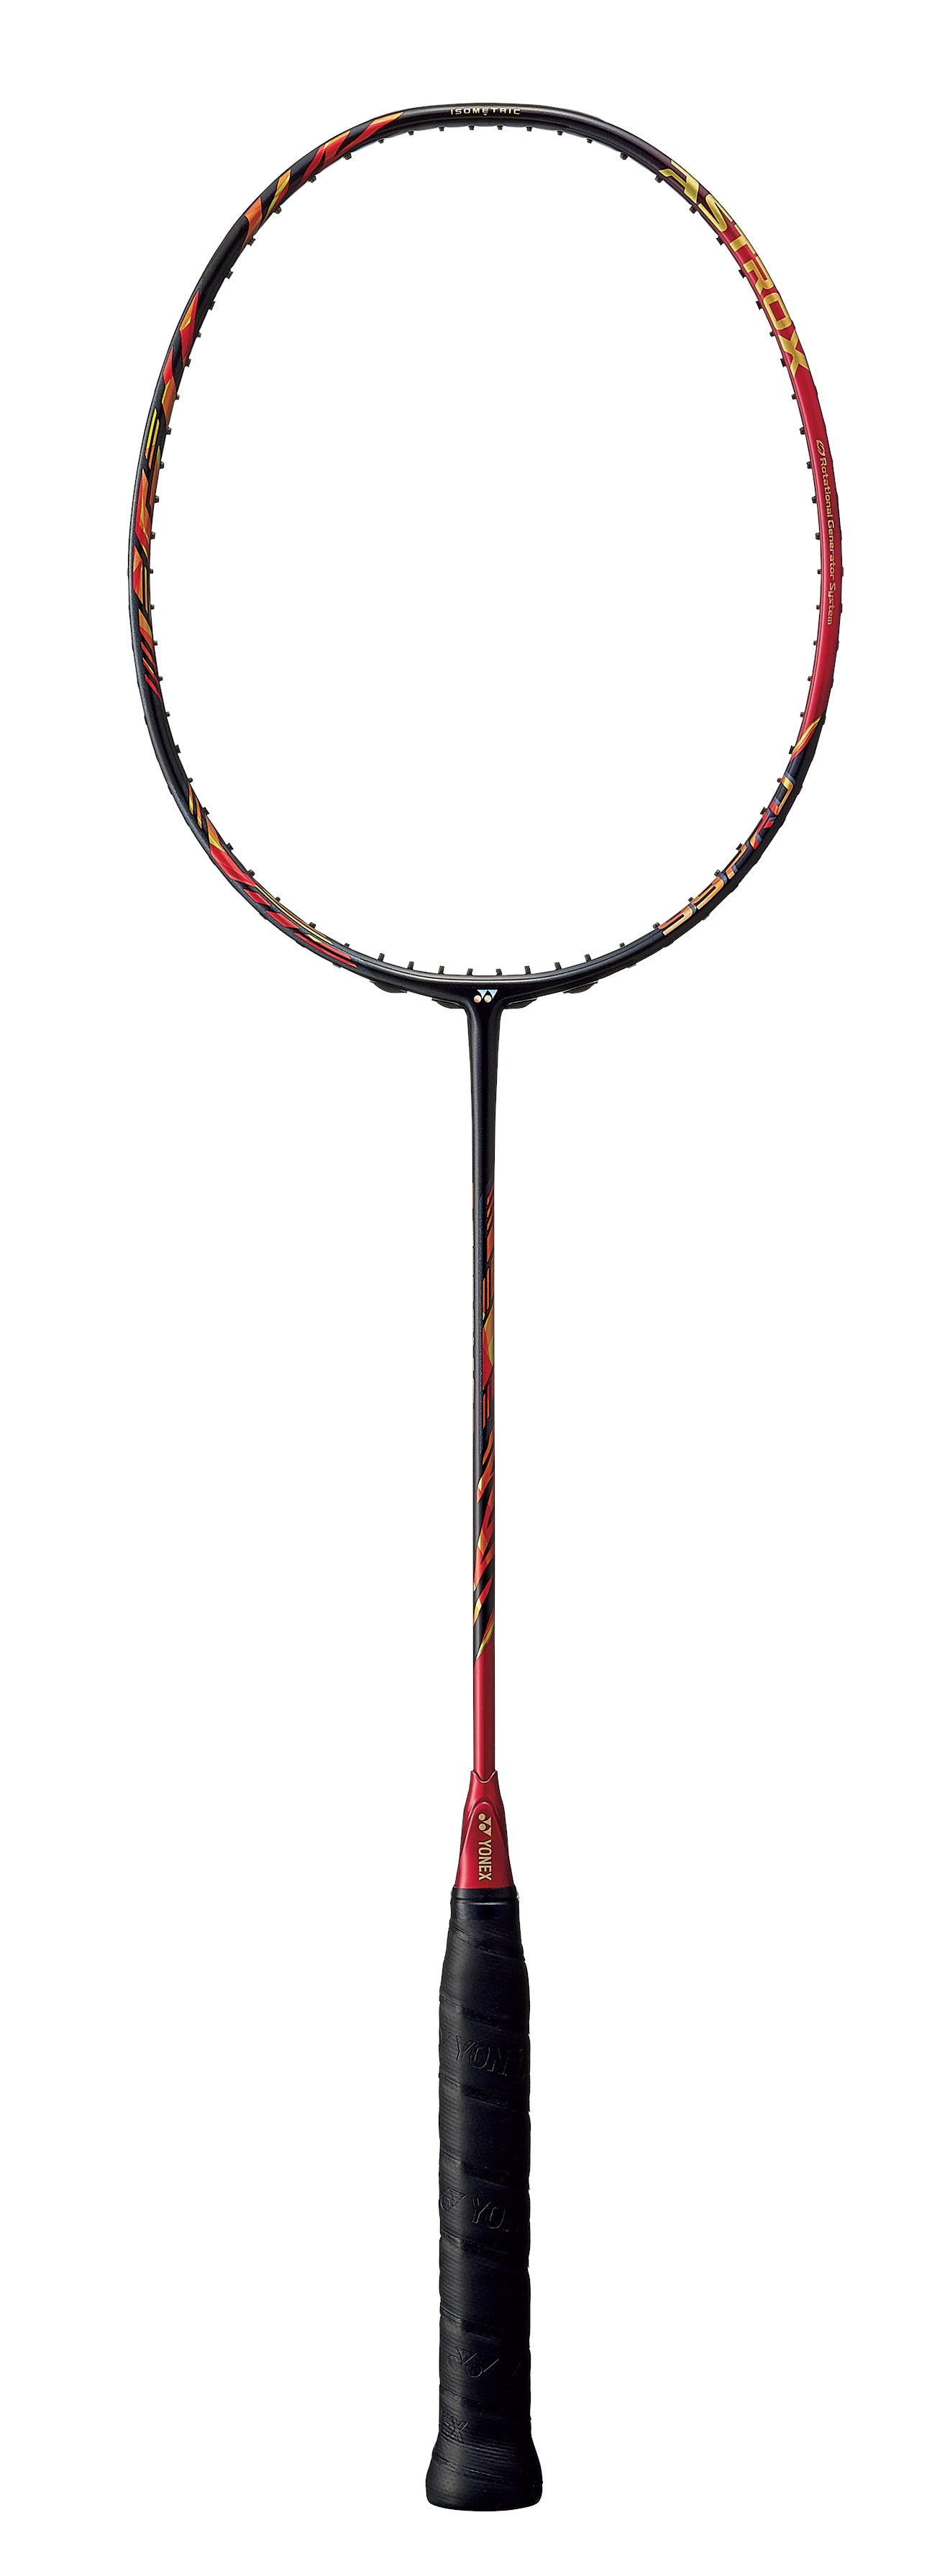 Yonex Astrox 99 Pro Cherry Sunburst (4U) Badminton Racket  - Red